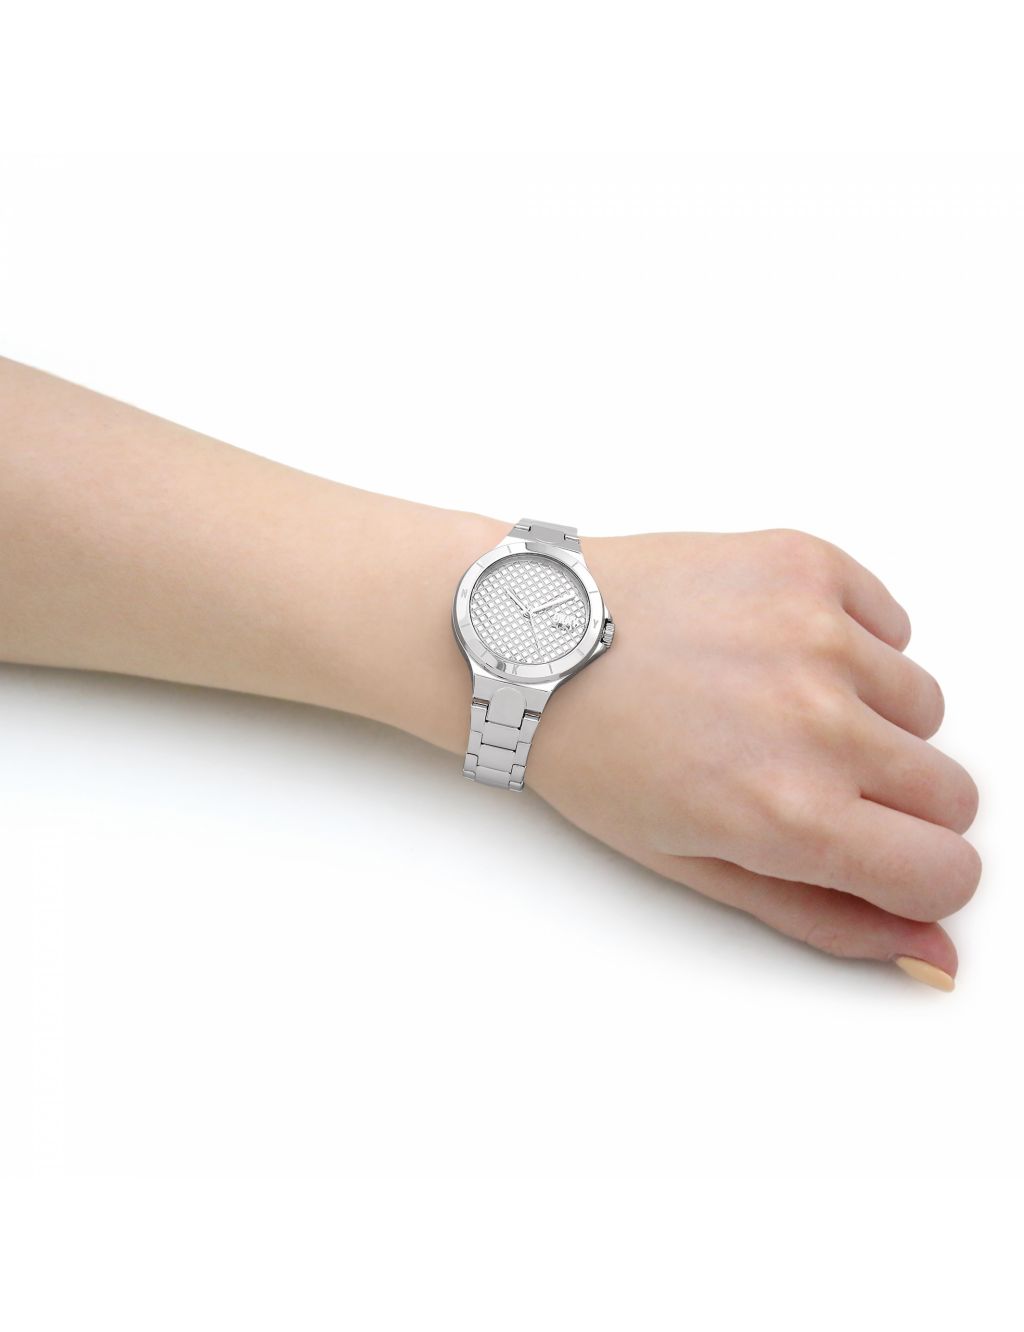 DKNY Chambers Metal Bracelet Watch image 2